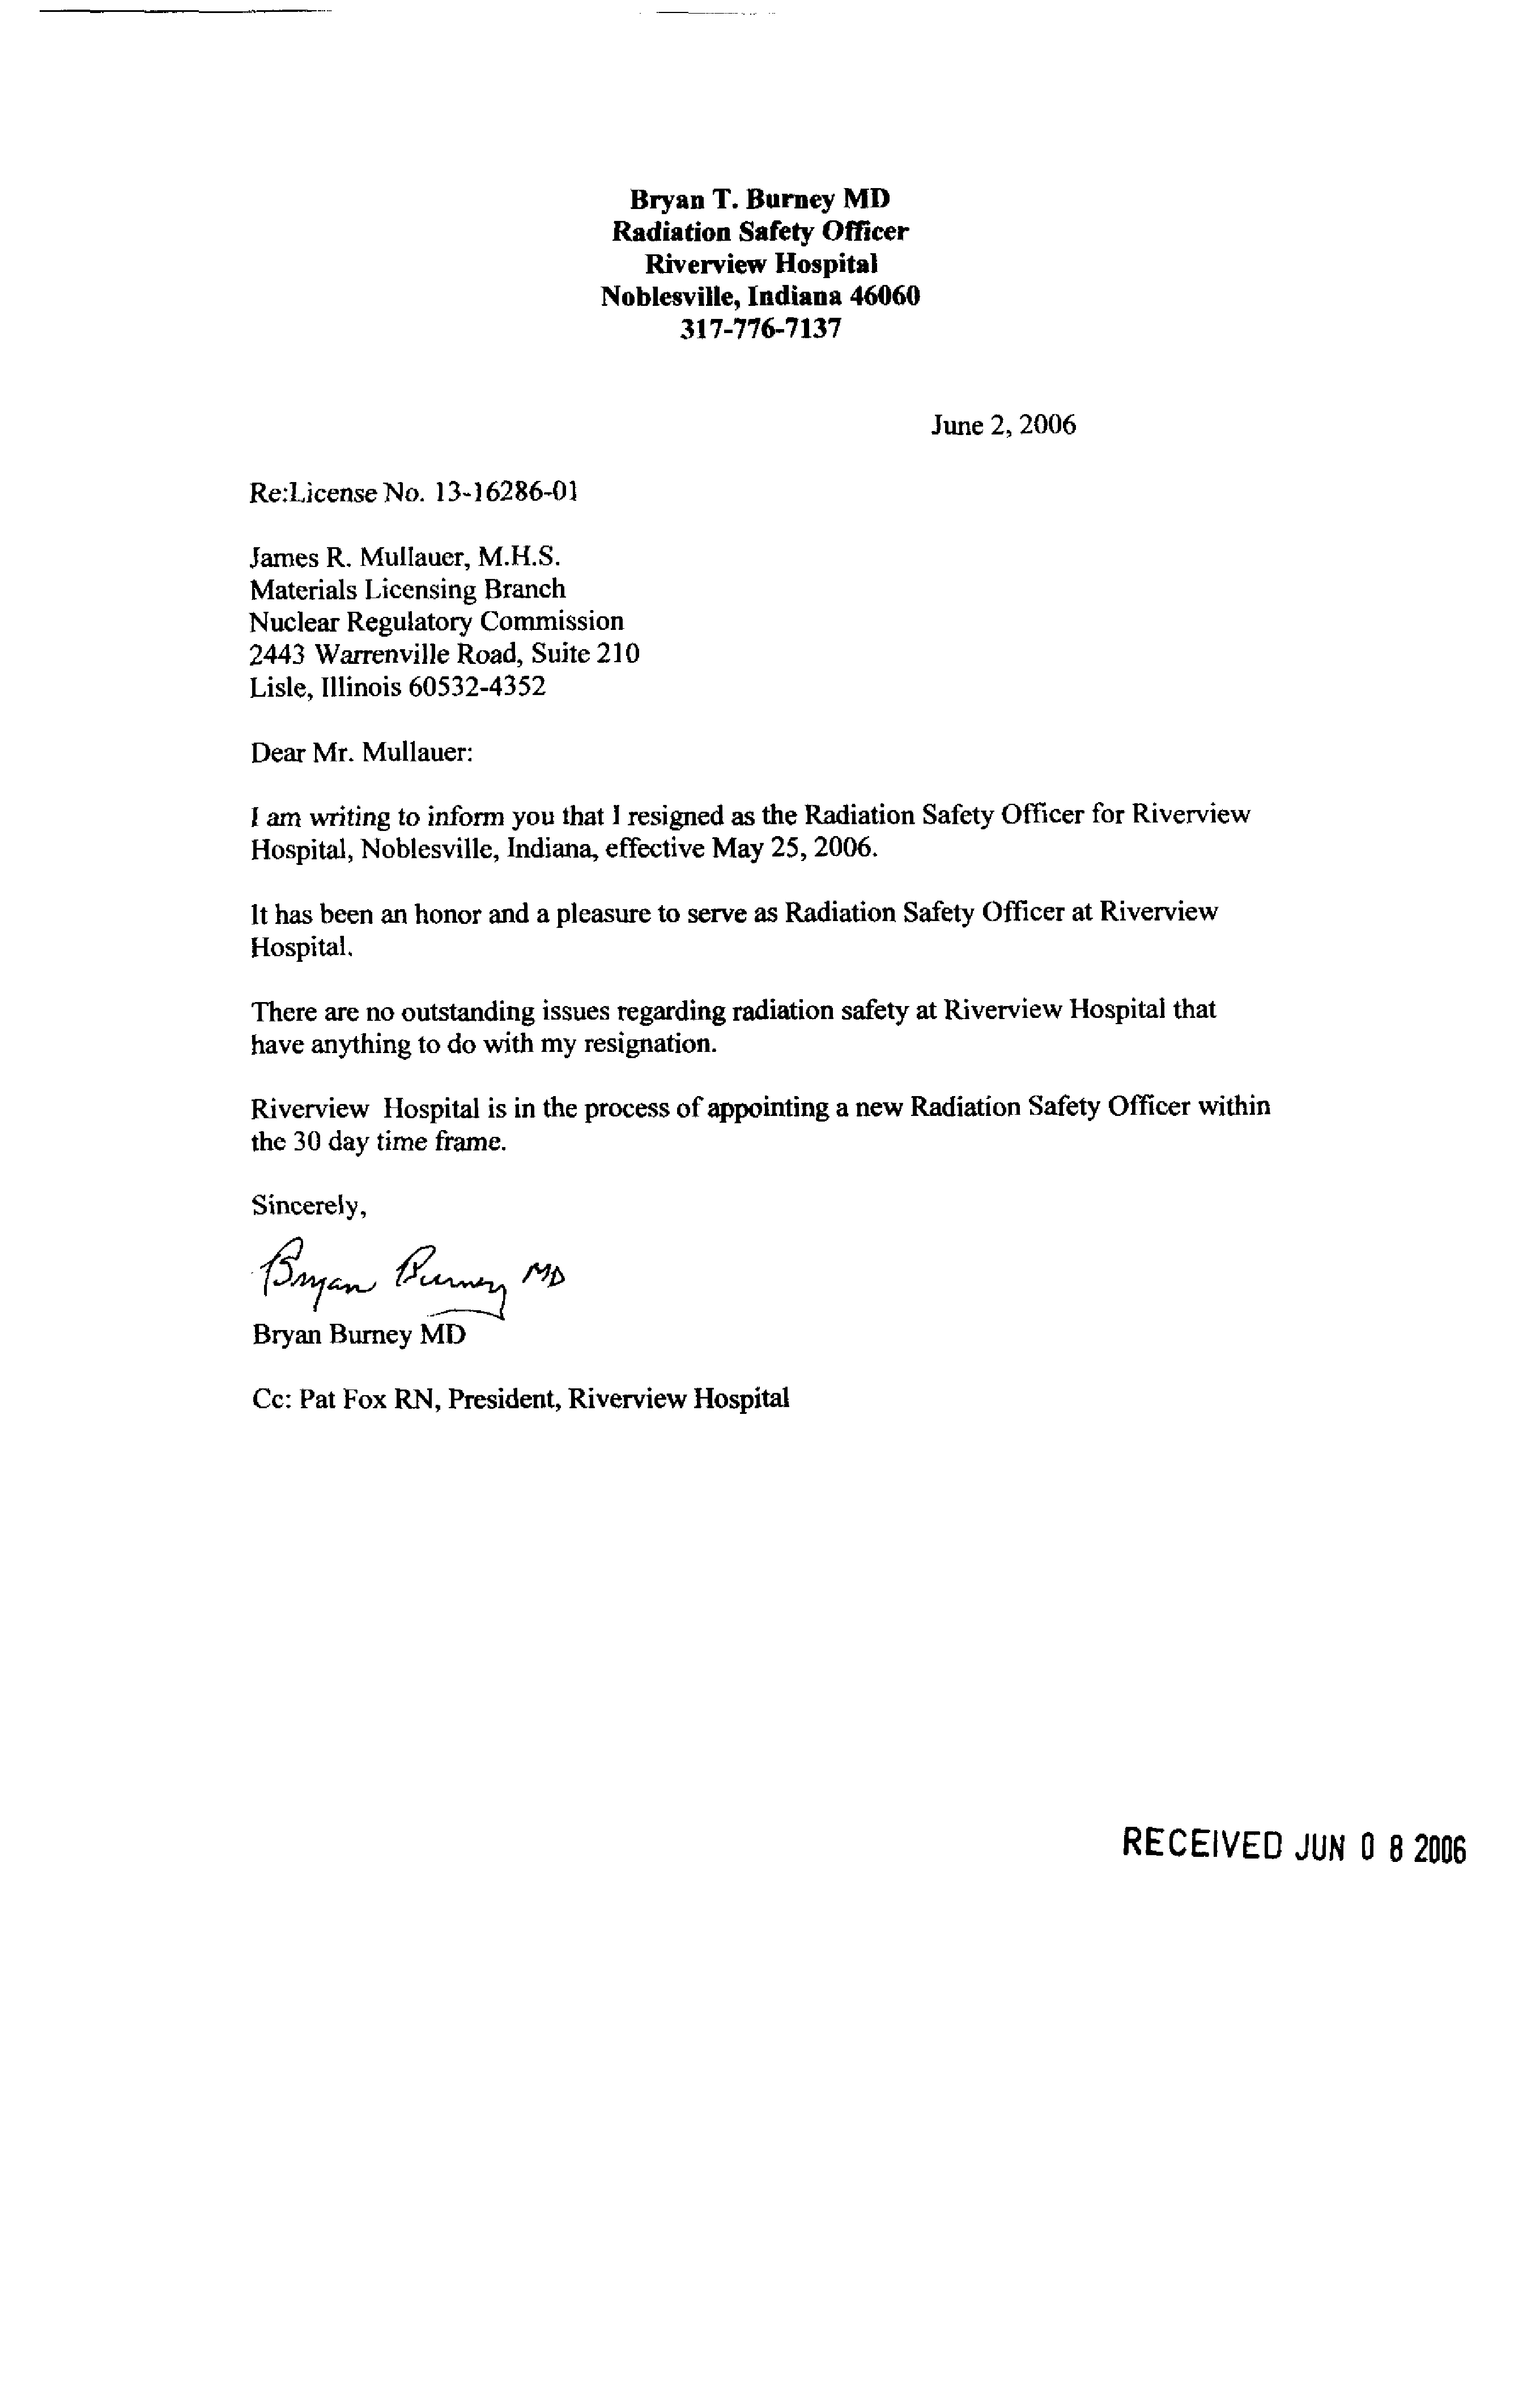 radiation safety officer resignation letter modèles